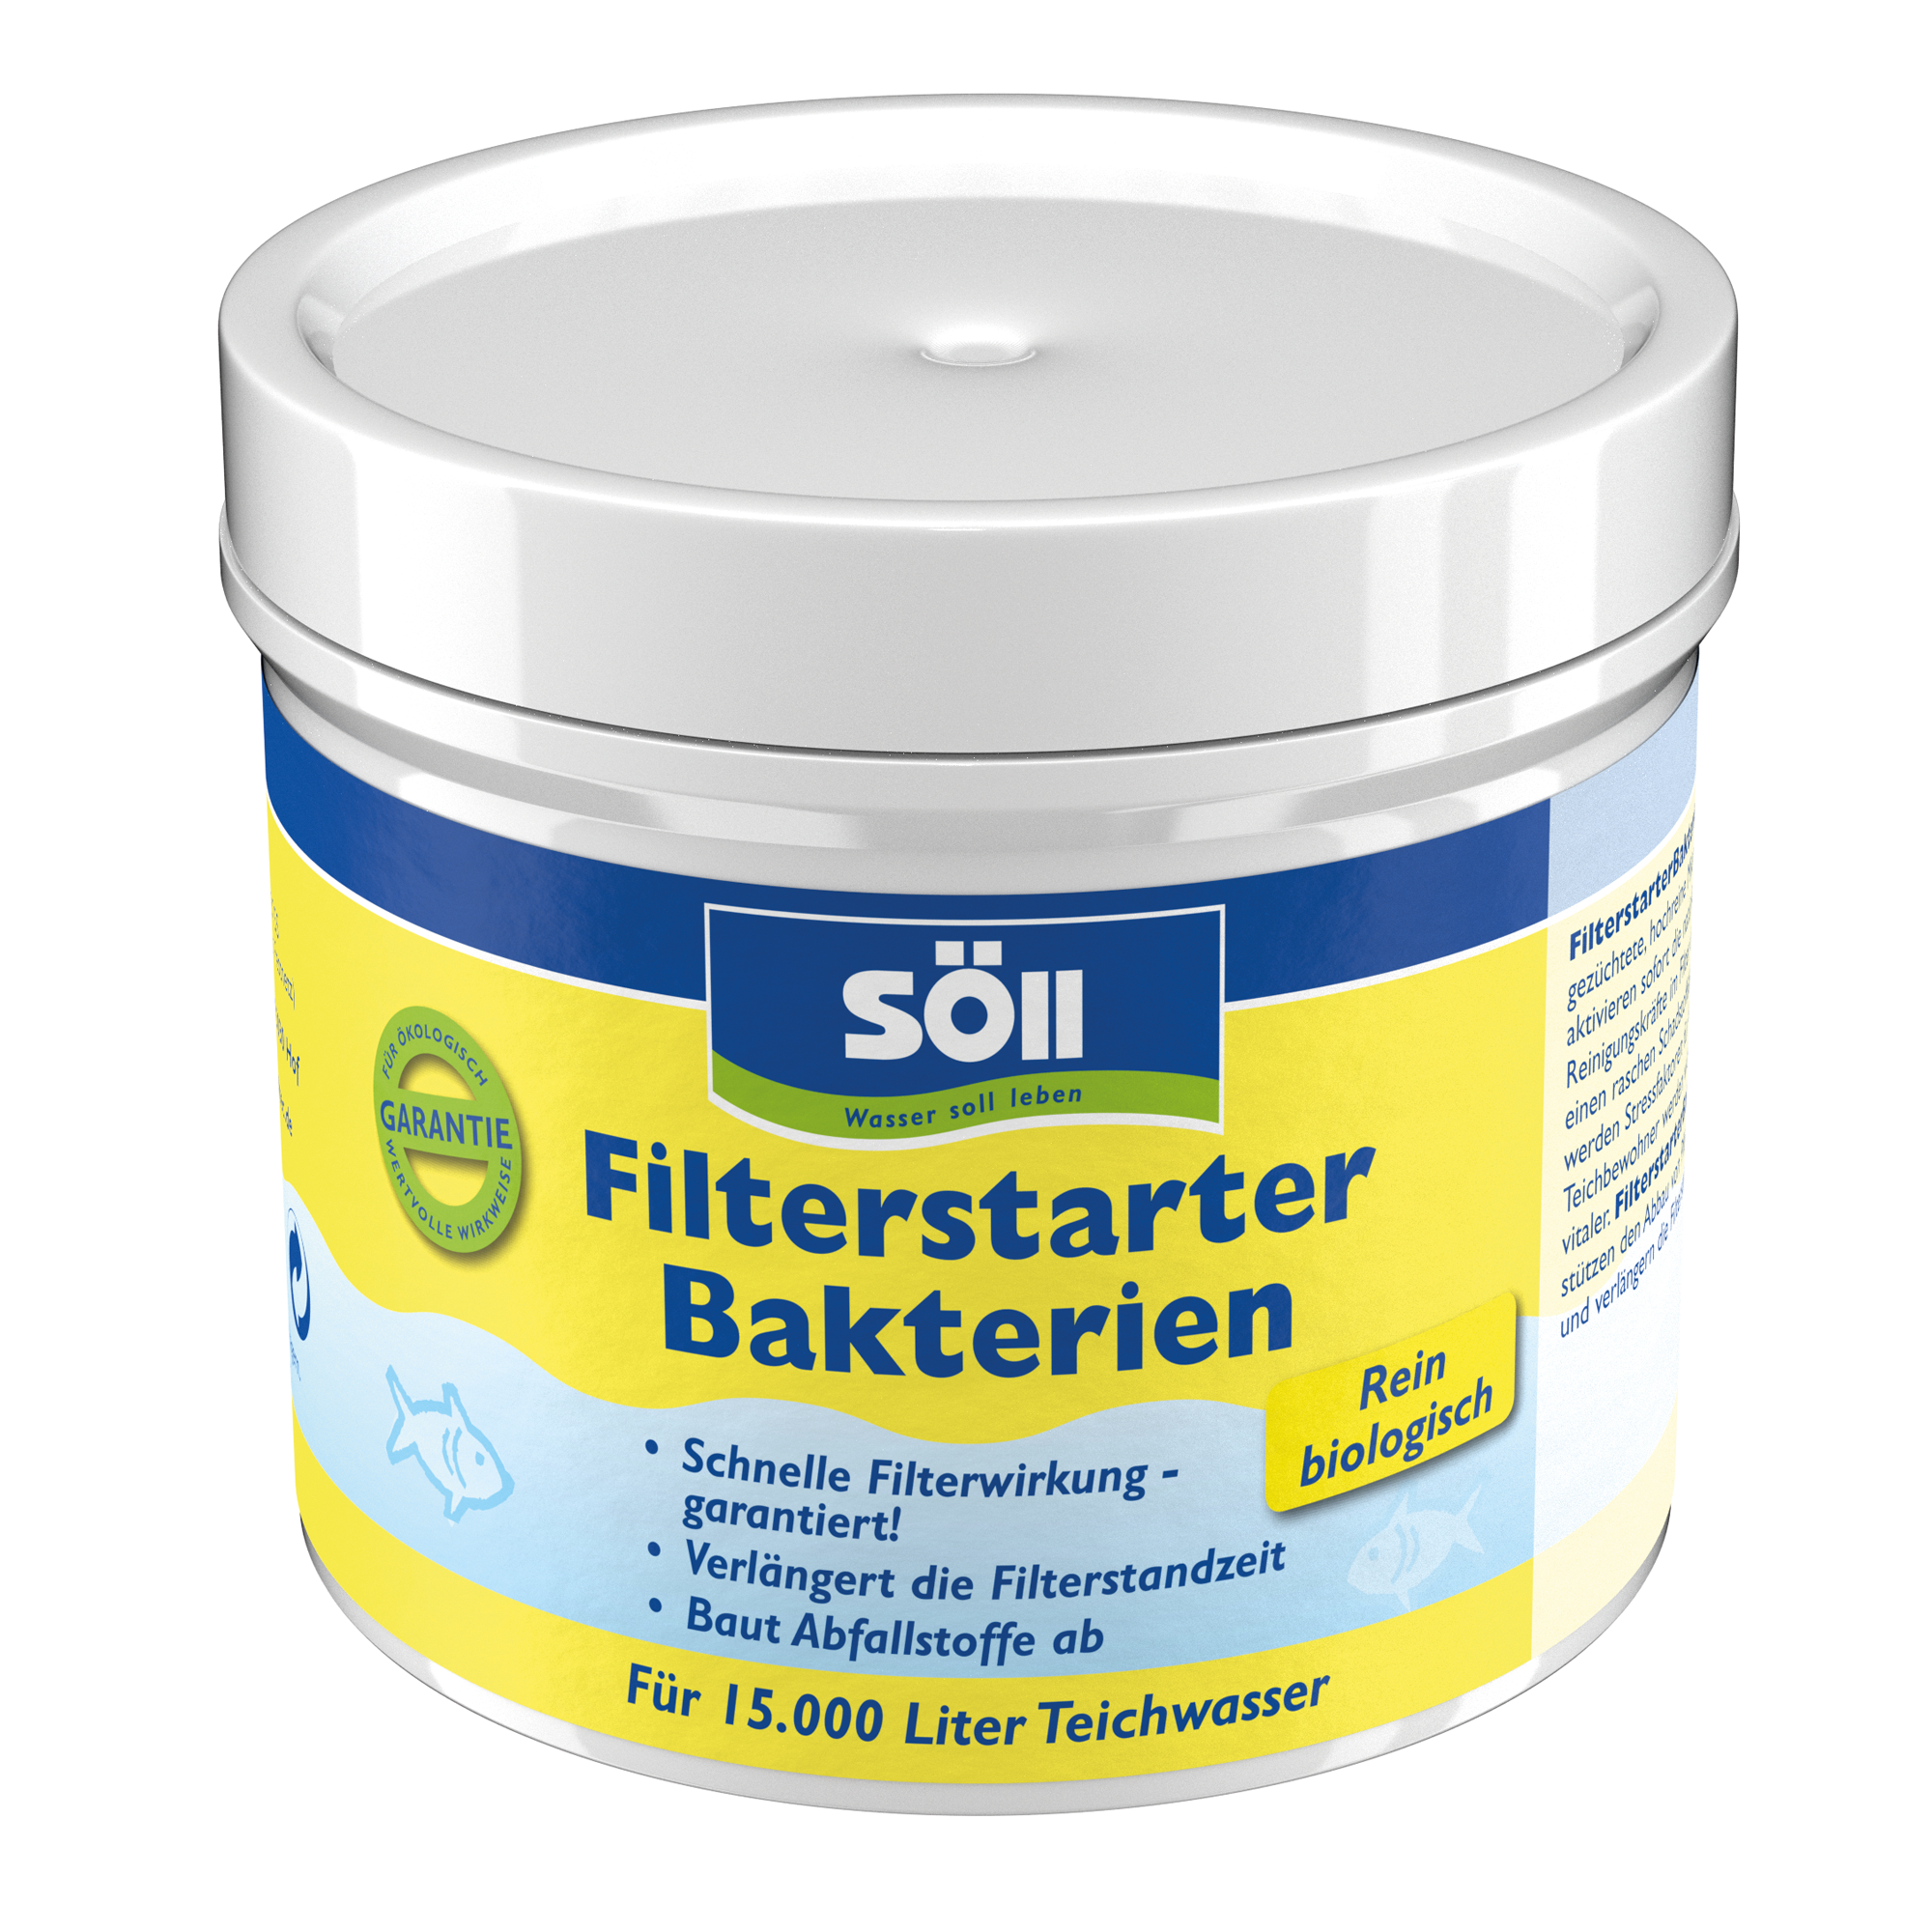 Filterstarter-Bakterien 100 g + product picture